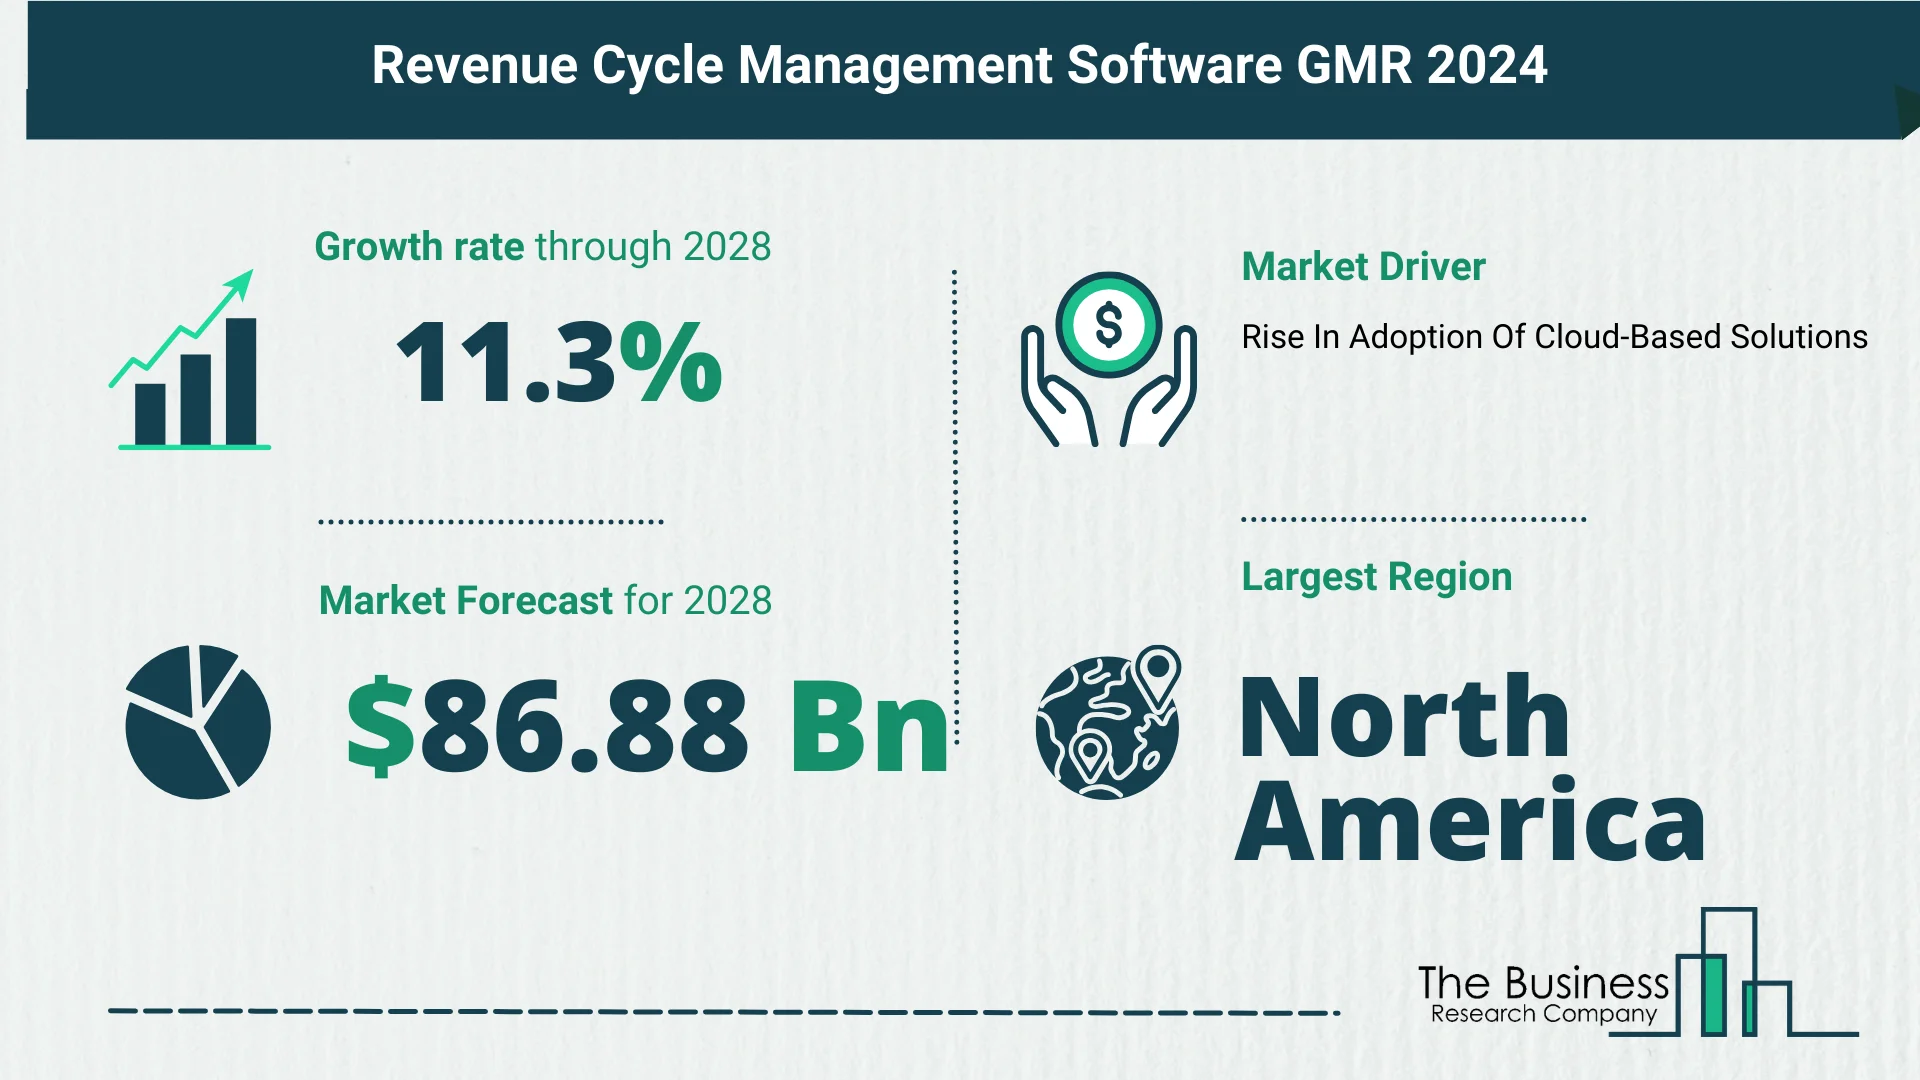 Revenue Cycle Management Software